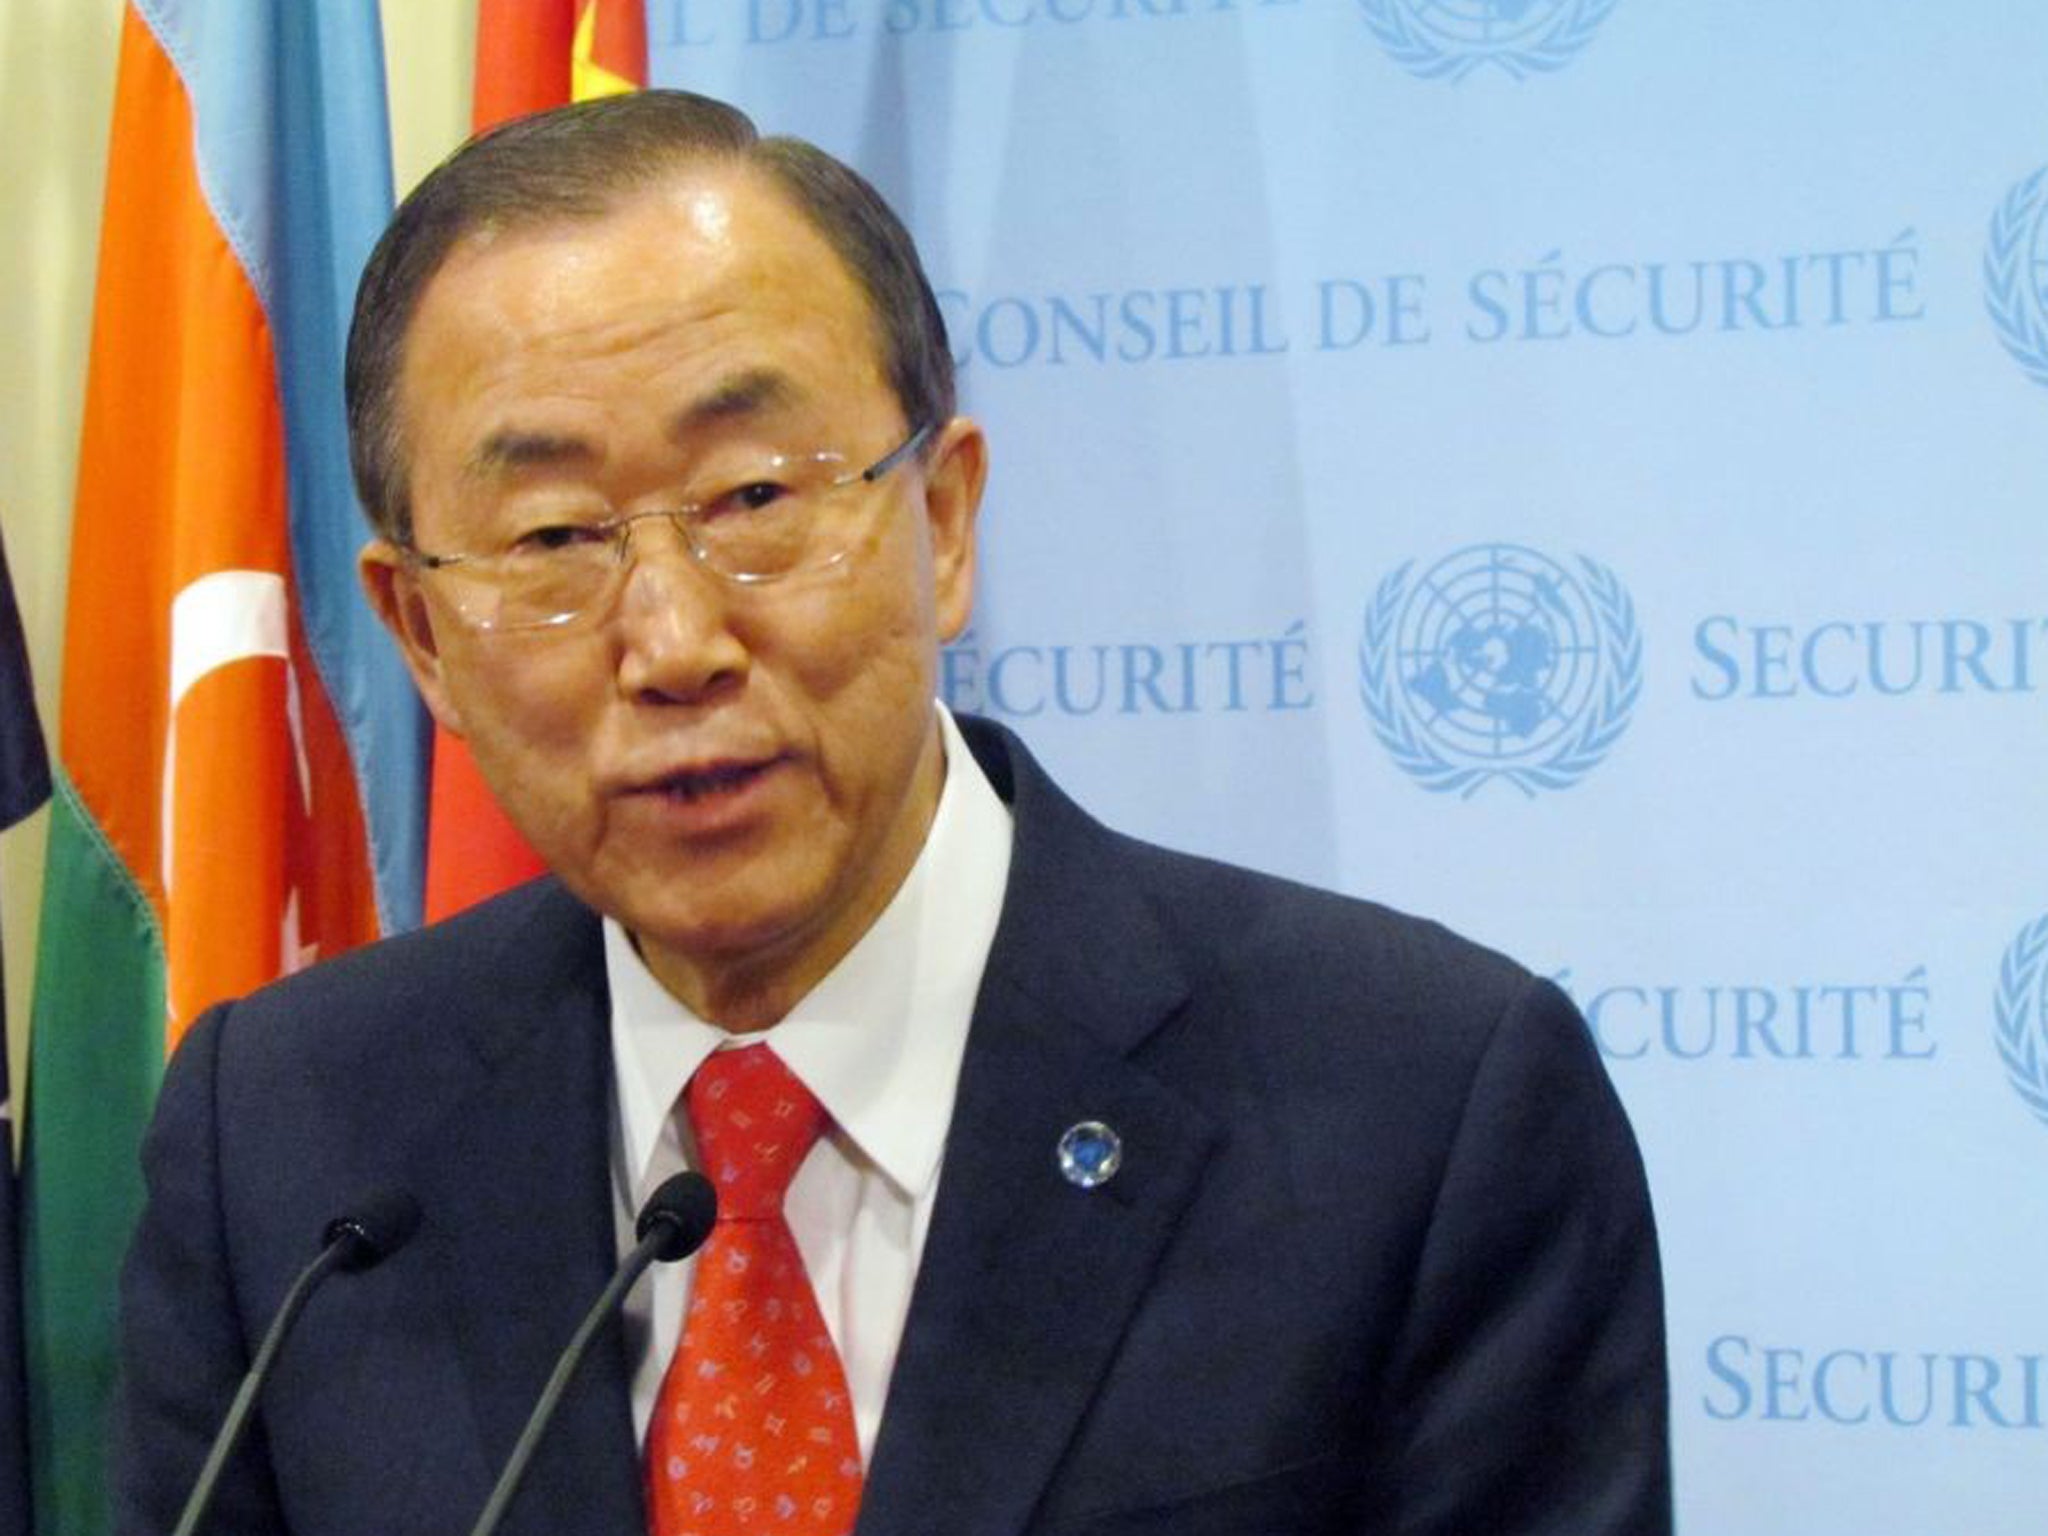 UN Secretary-General Ban Ki-moon began sending out invitations to the Syria peace talks on Monday